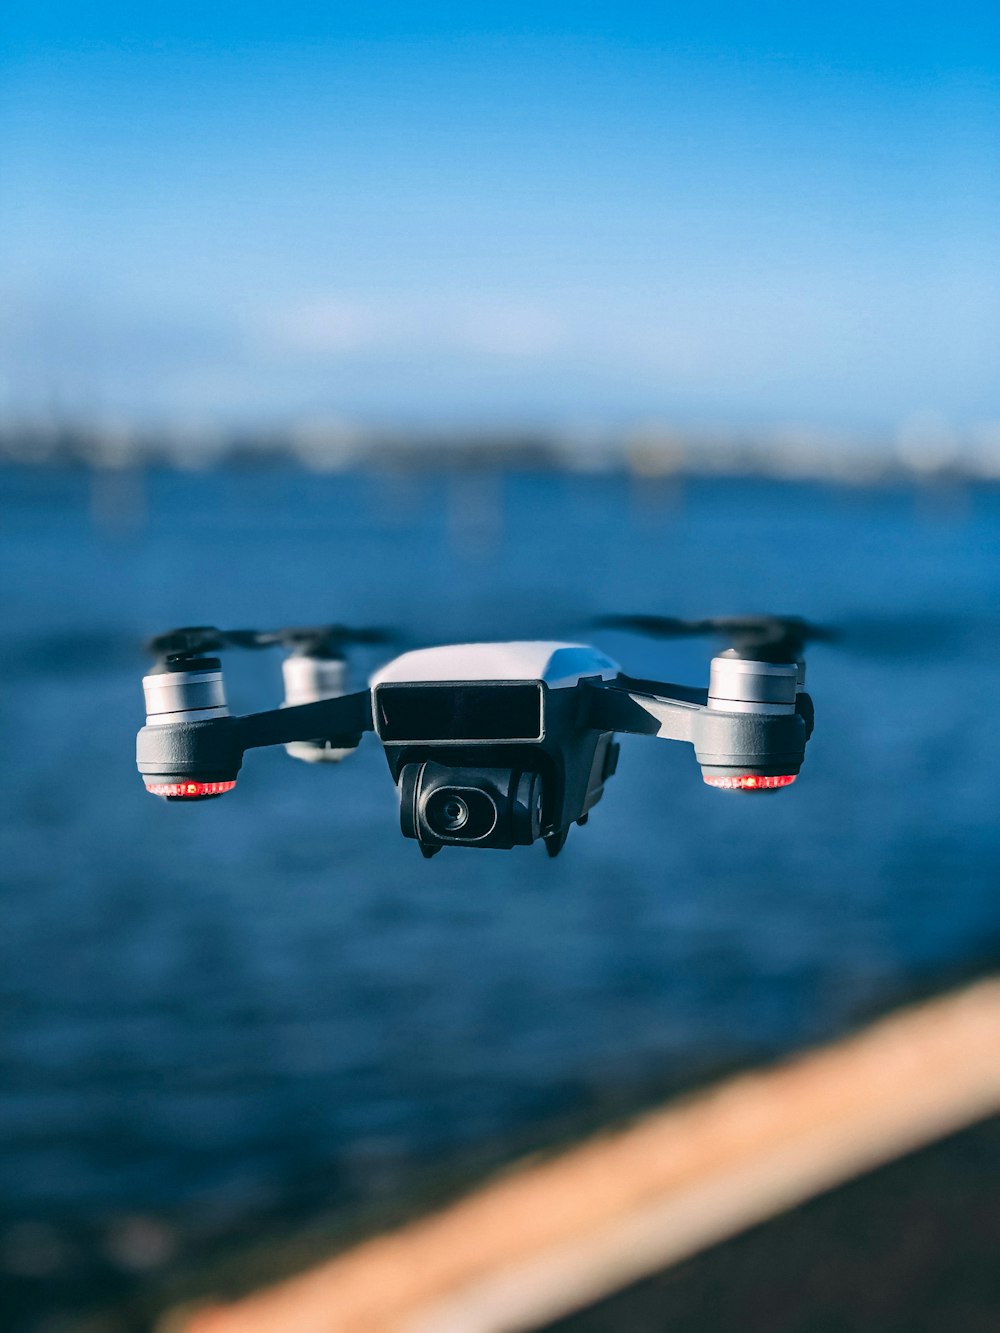 Zeitrafferfotografie der DJI-Drohne im Flug